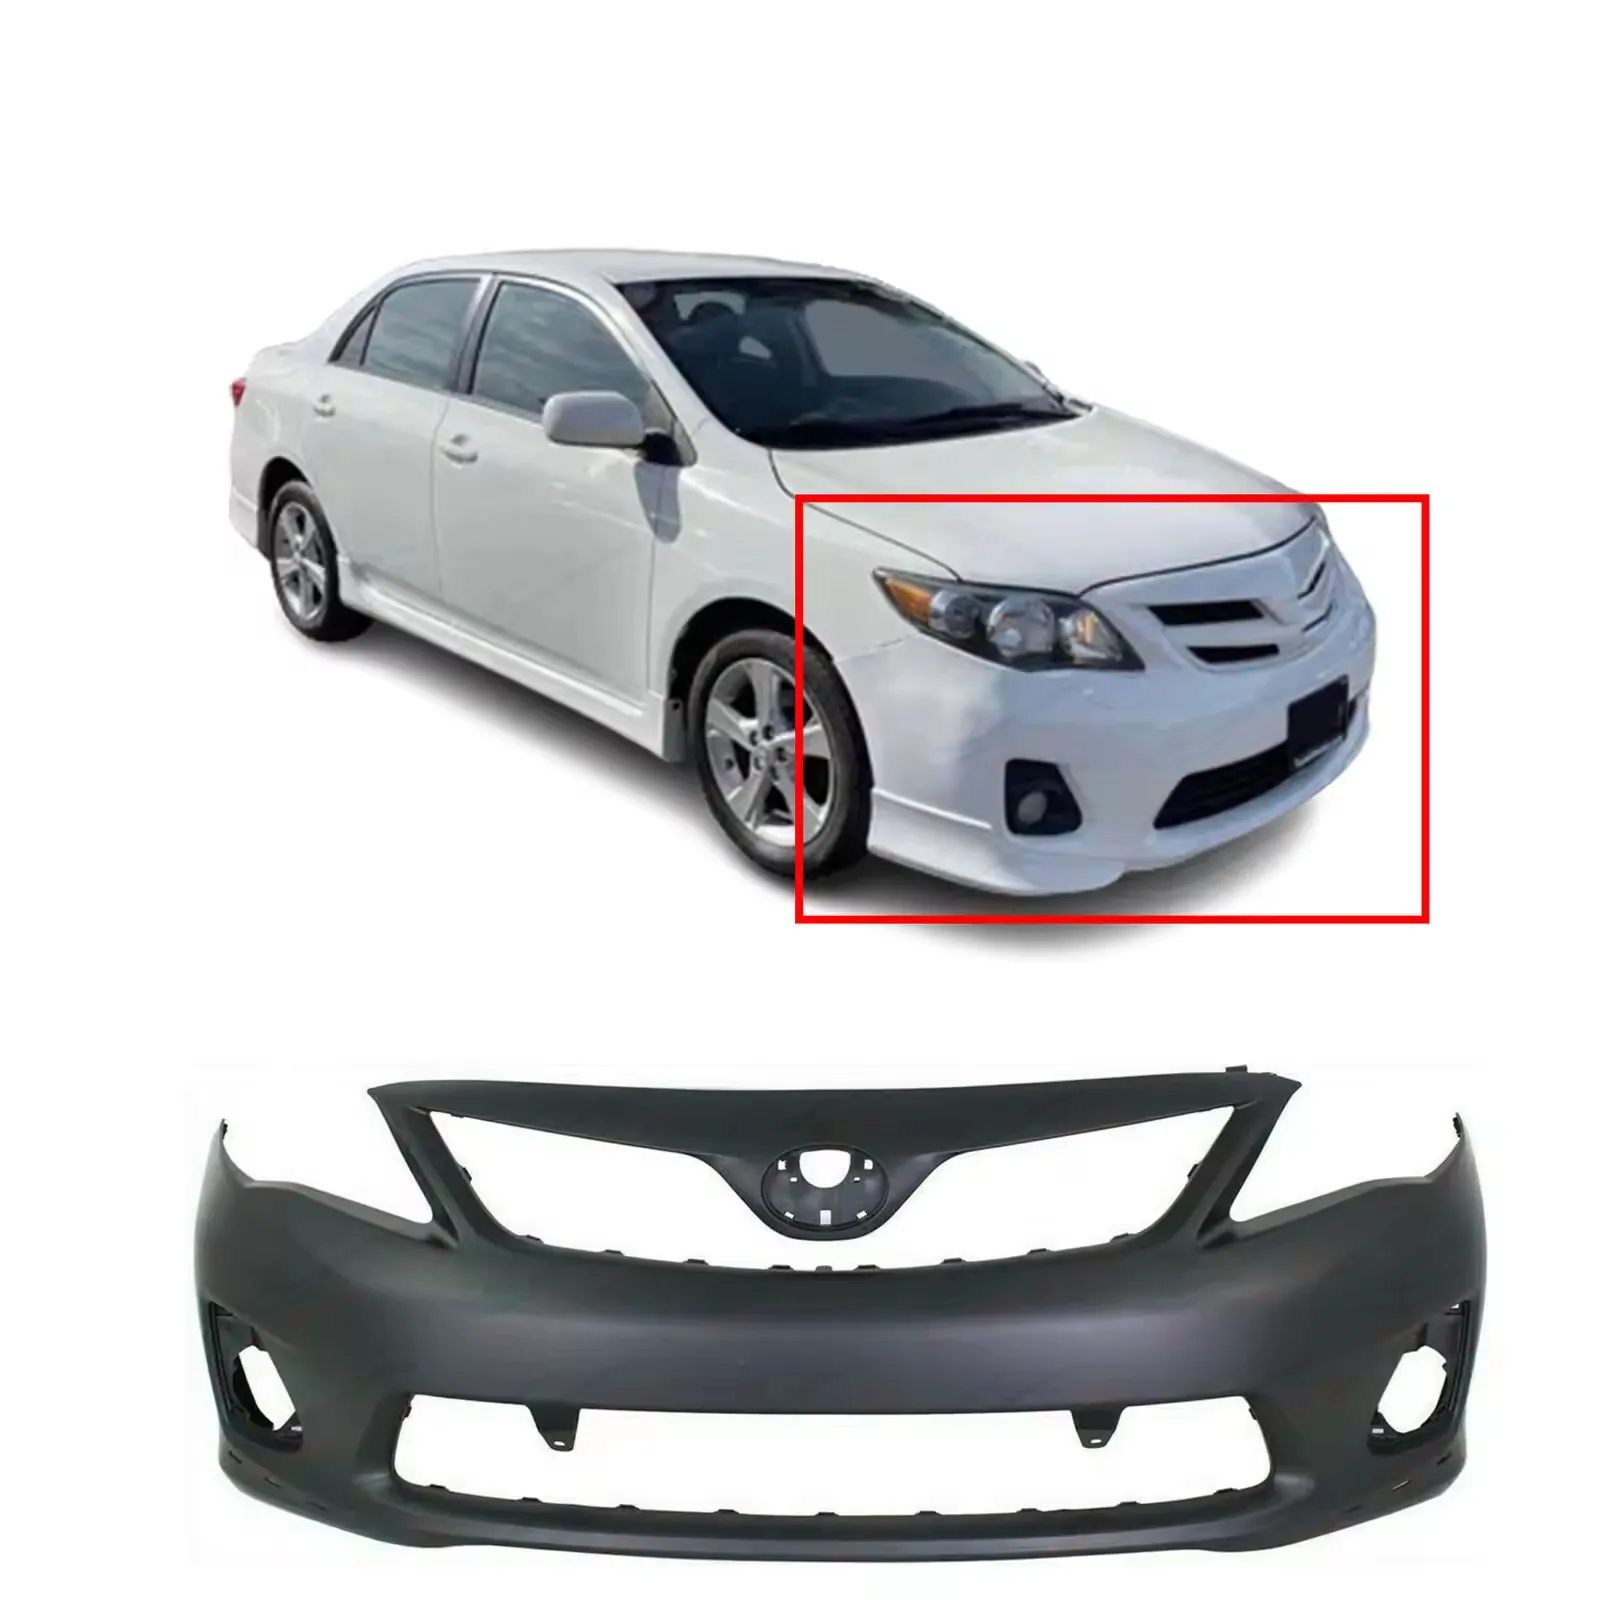 Capa de para-choque dianteiro personalizada para carro, acessórios para Toyota Corolla 2010 -2013